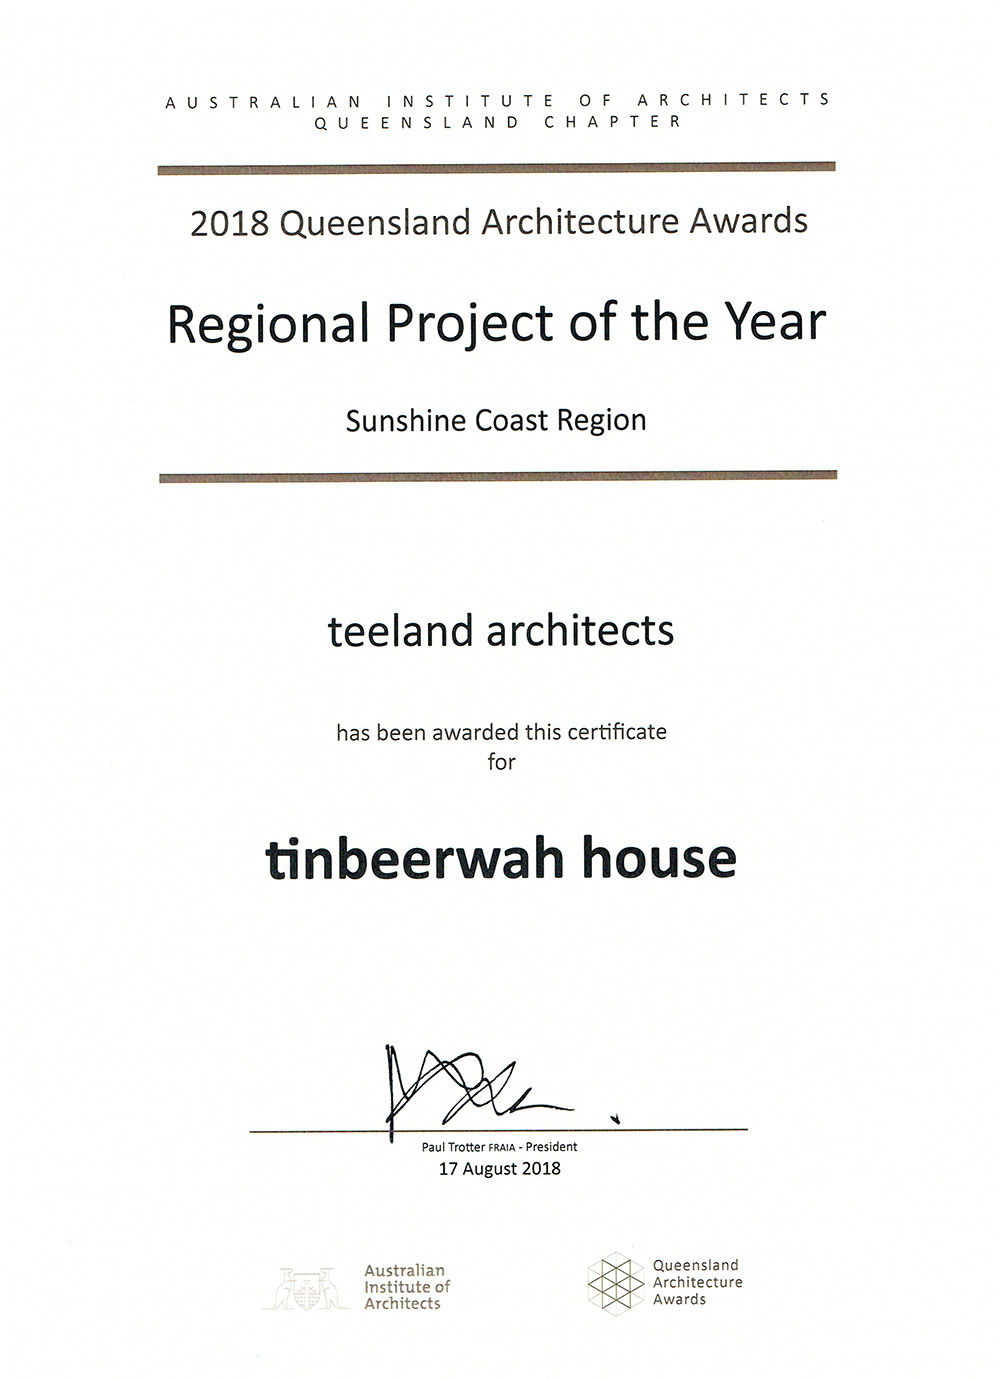 Teeland Architects